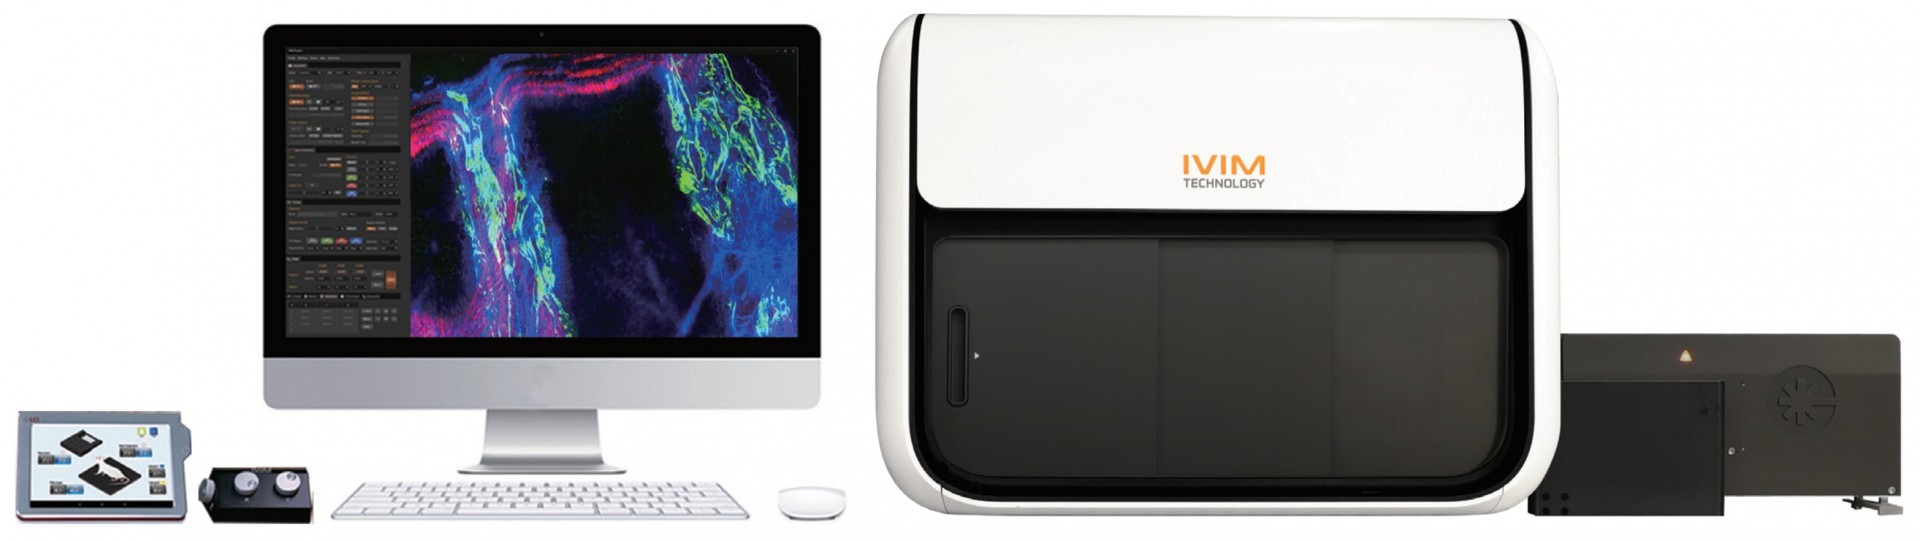 IVM-CM3 單光子與雙光子雷射掃描活體影像系統